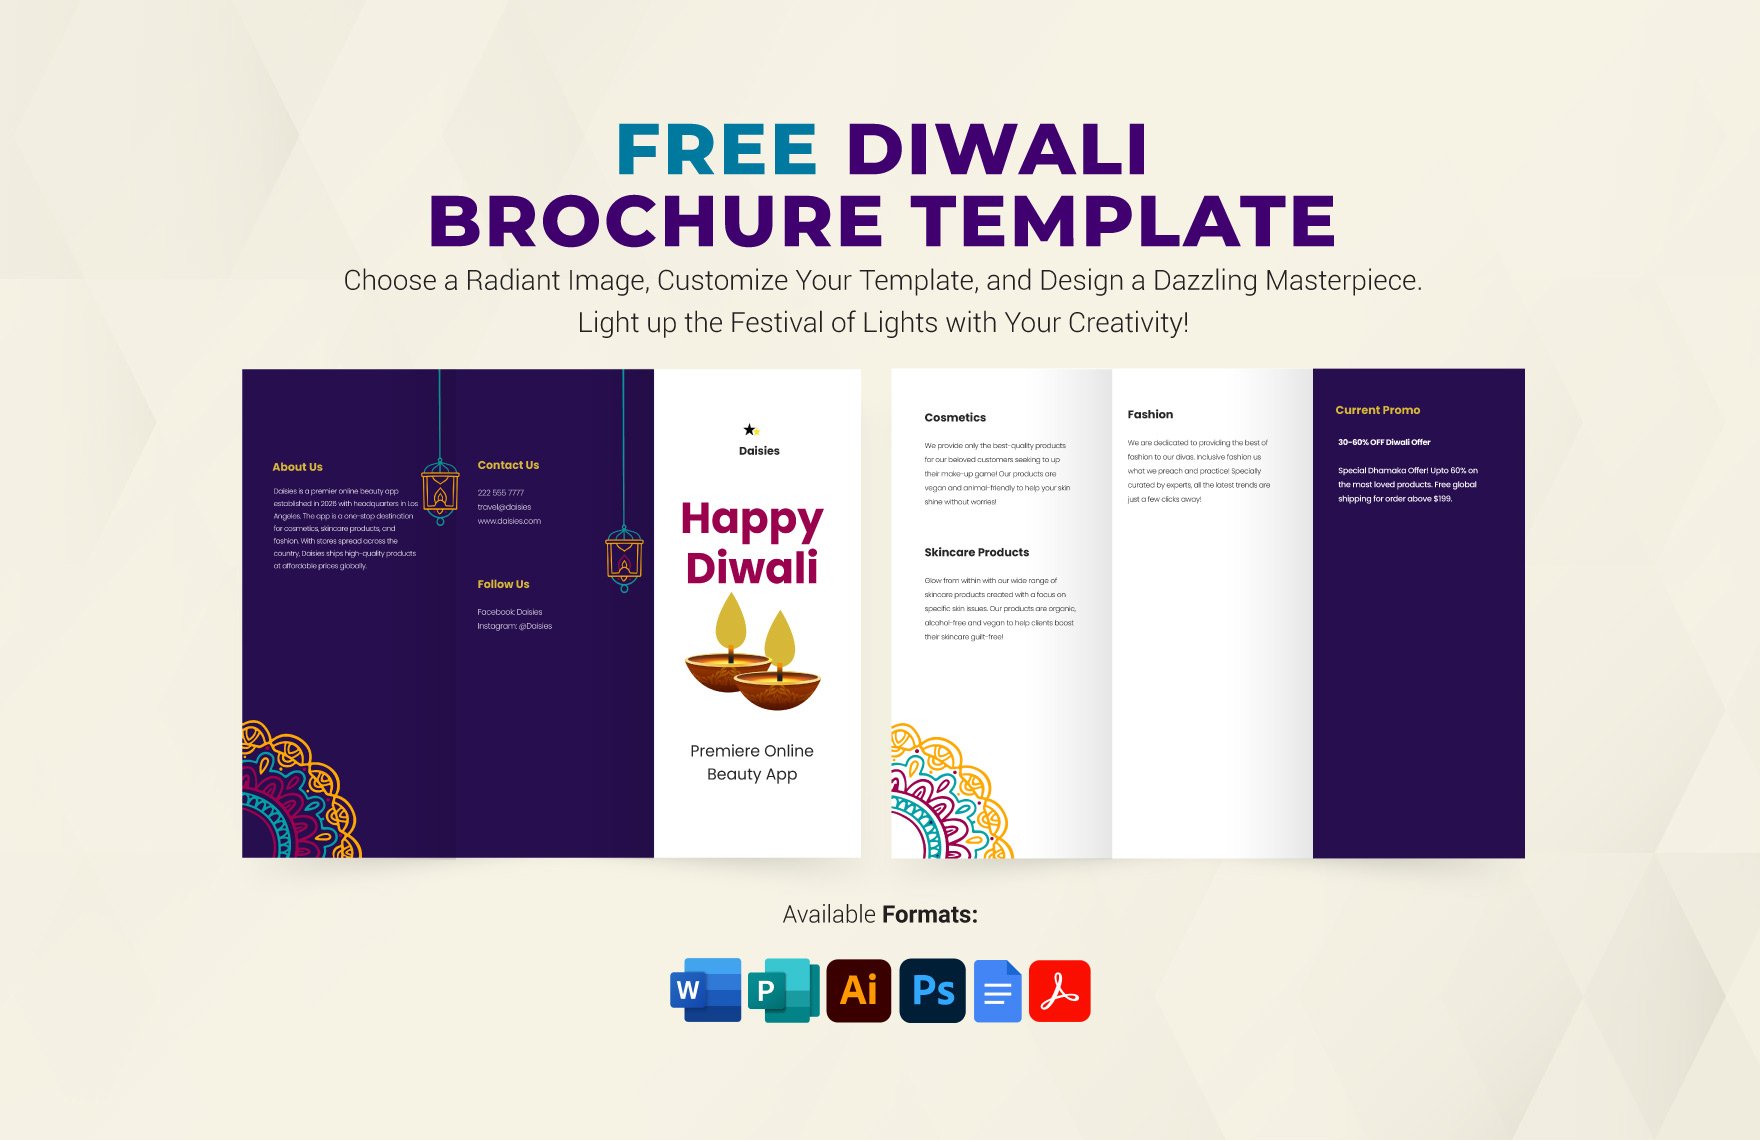 Free Diwali Brochure Template in Word, Google Docs, PDF, Illustrator, PSD, Publisher